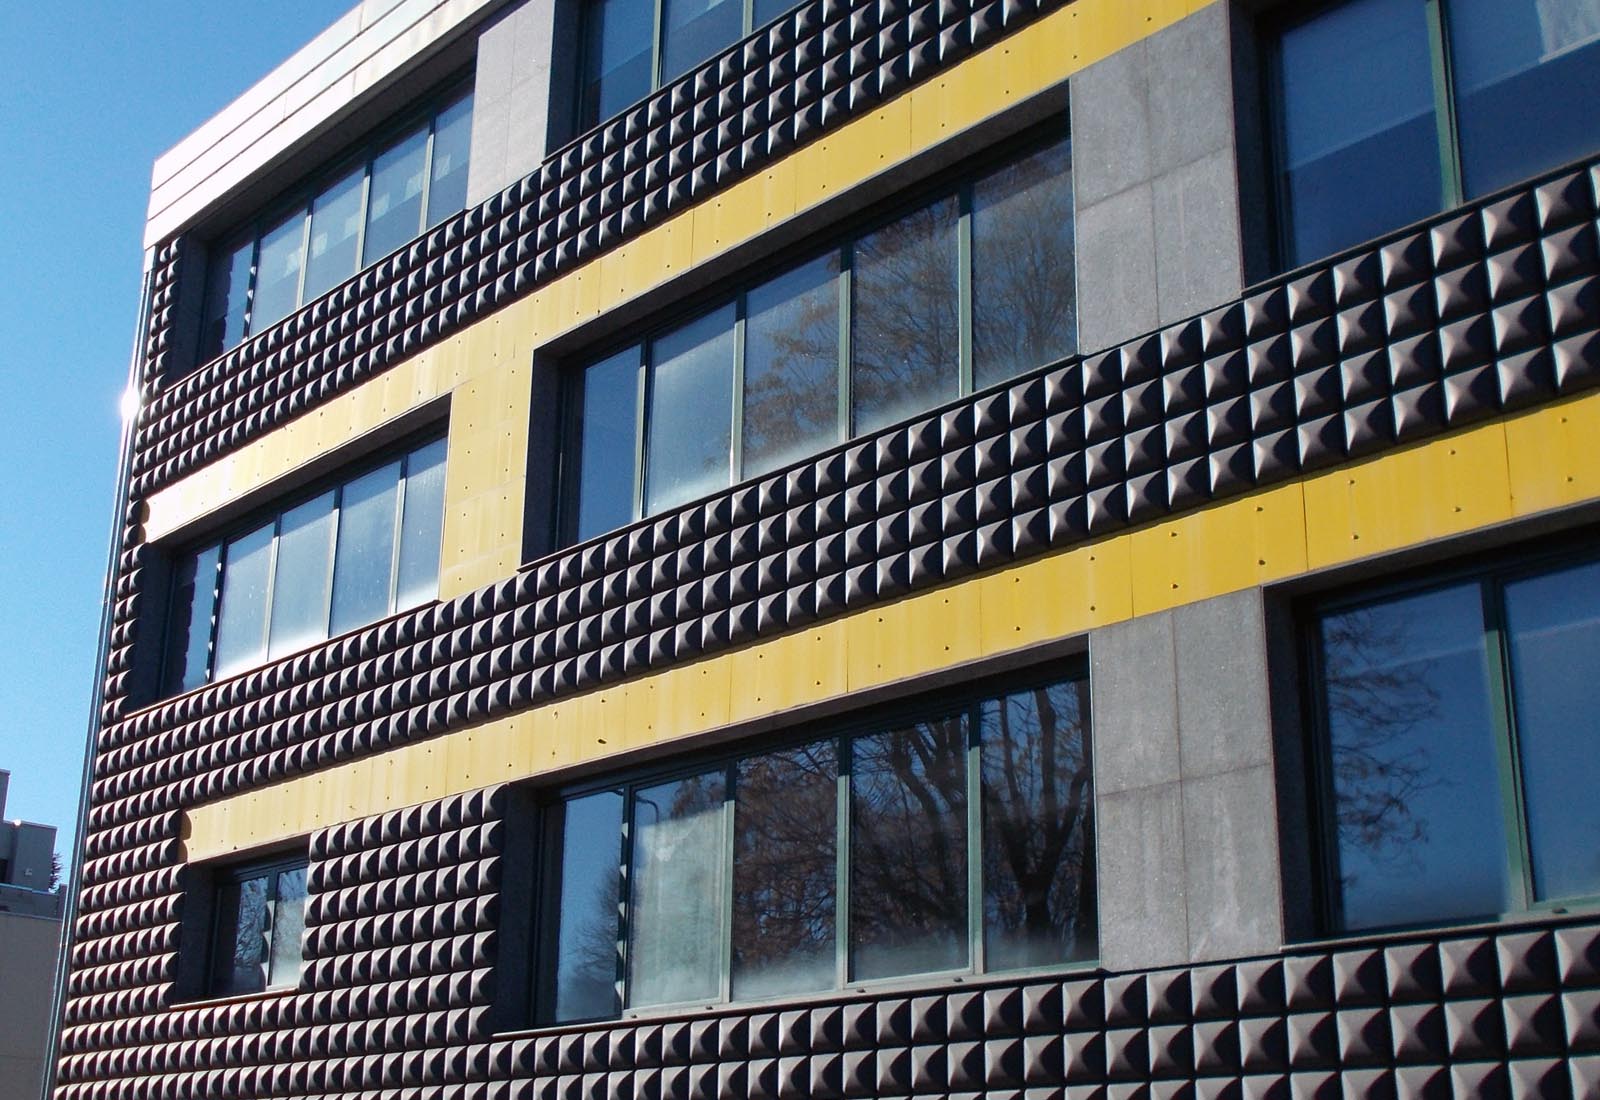 Building 25 Politecnico di Milano - Detail of the east facade